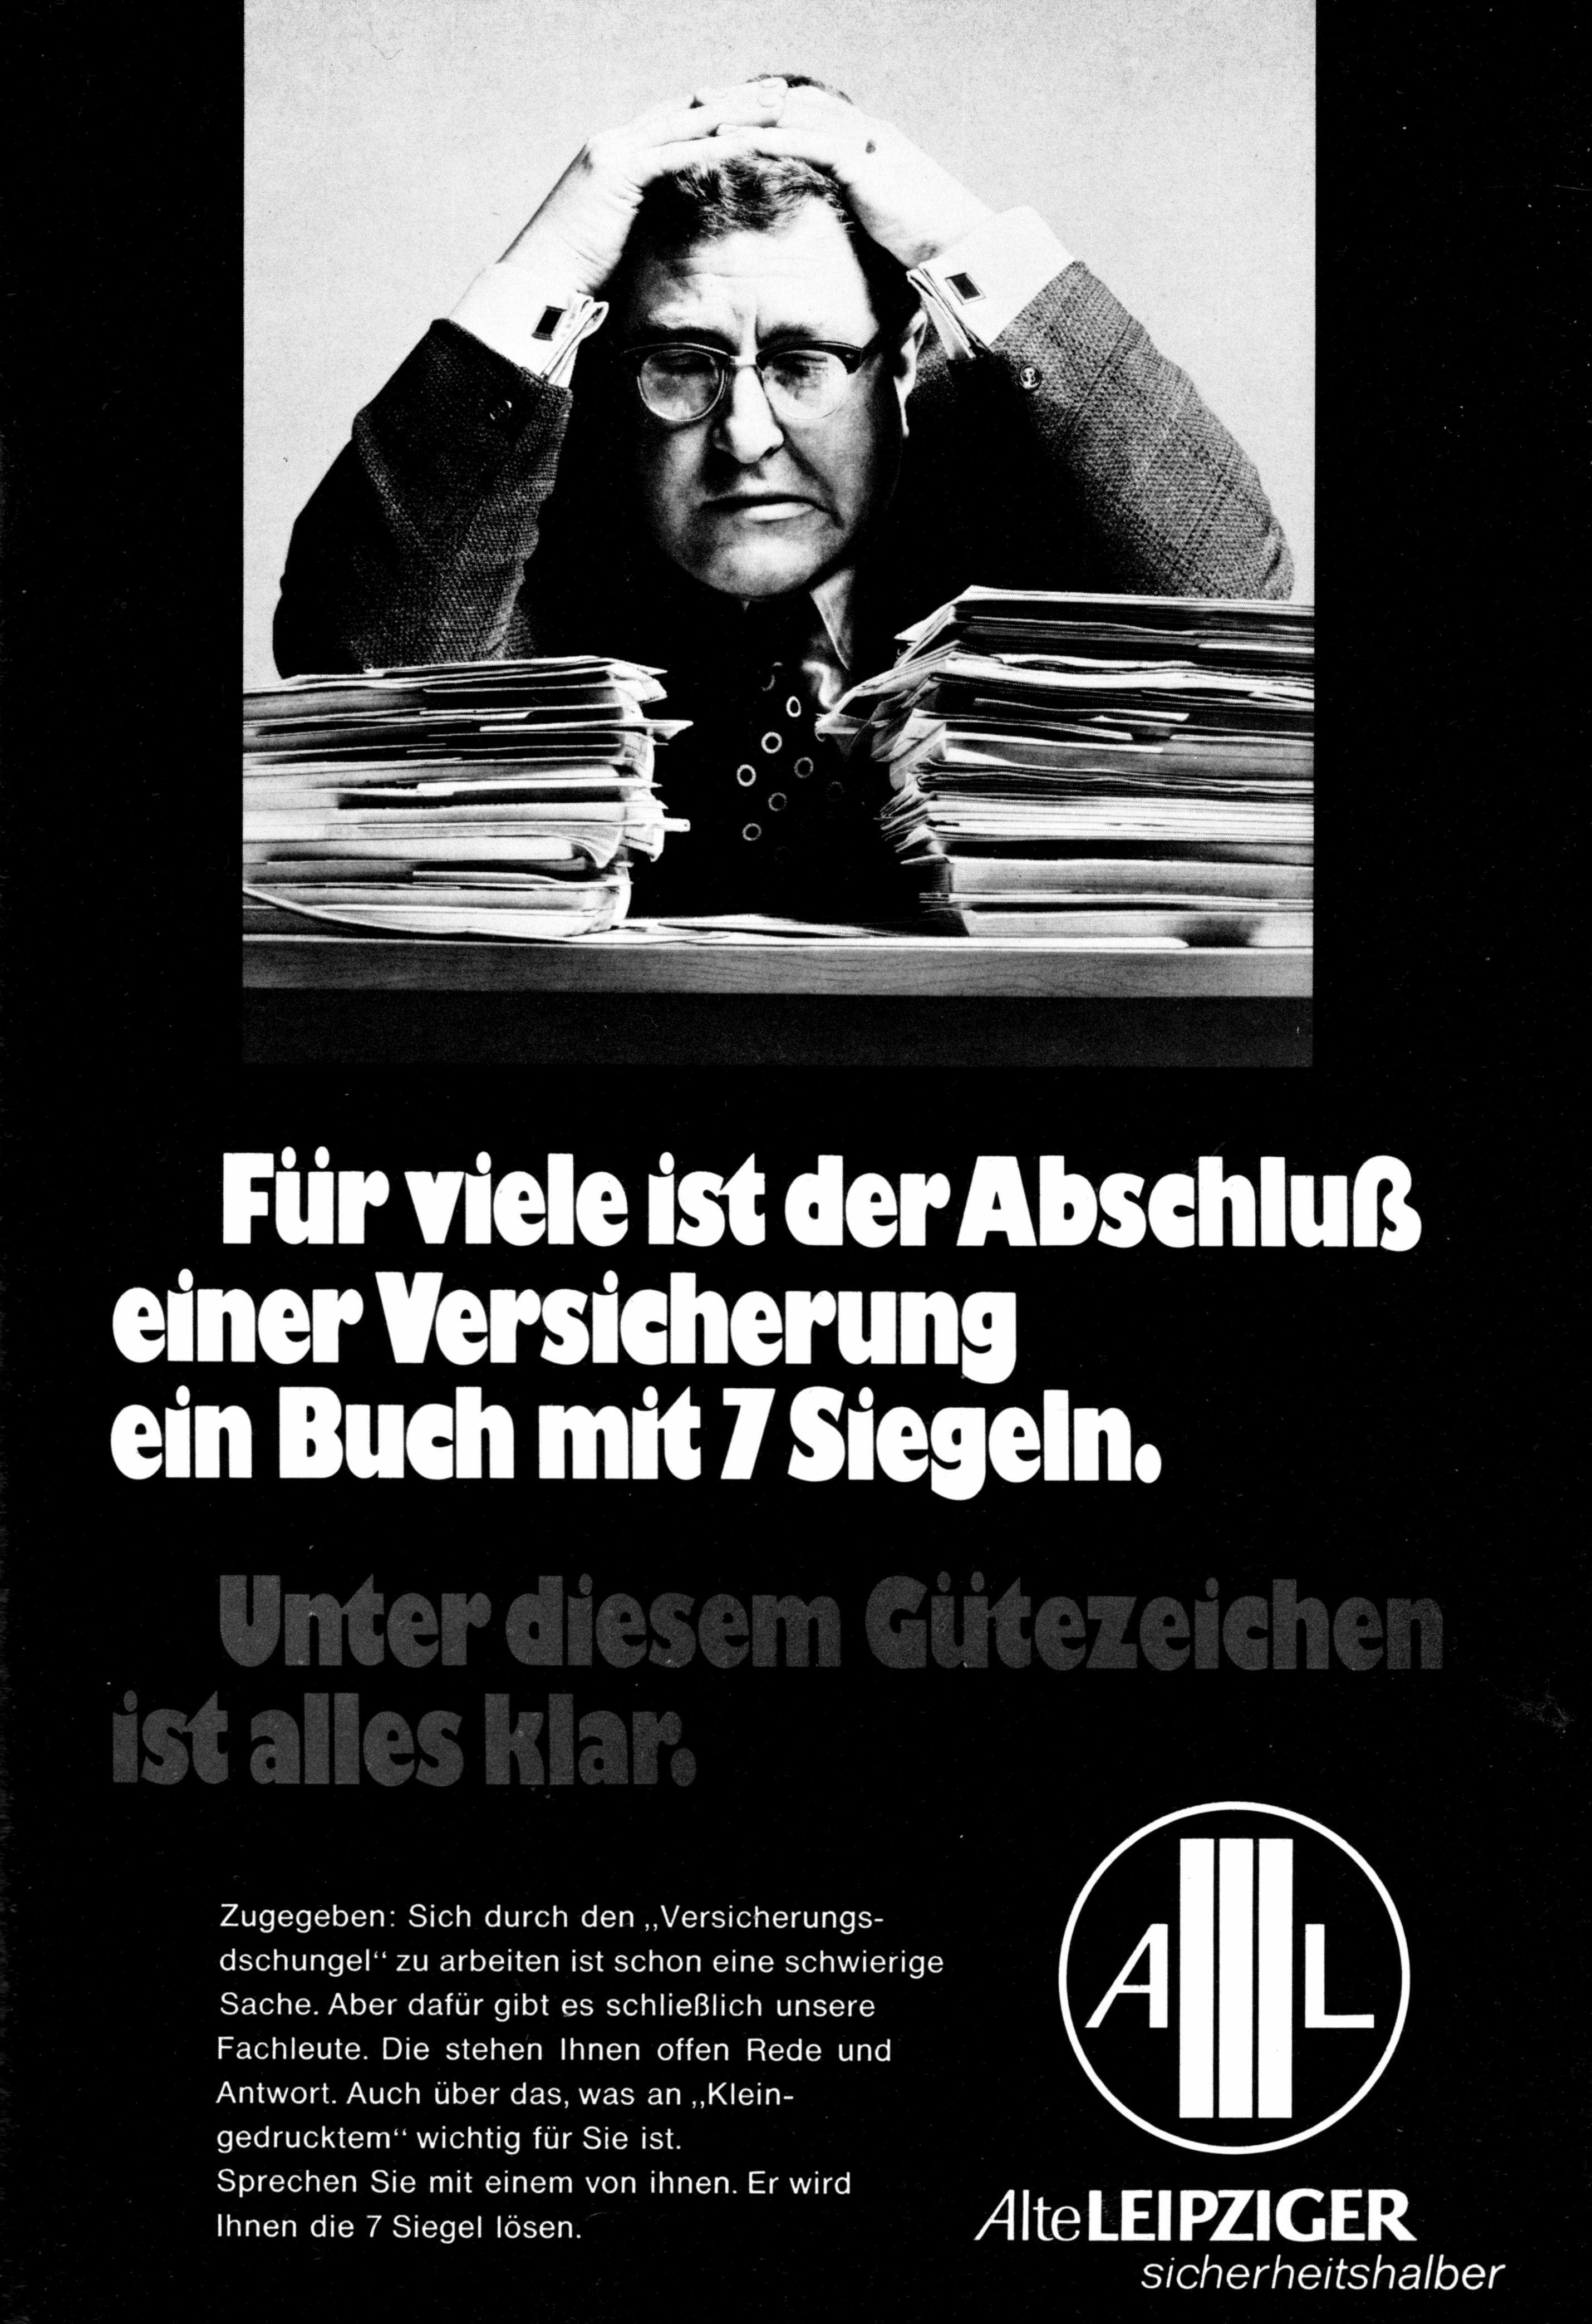 Alte Leipziger 1973 1.jpg